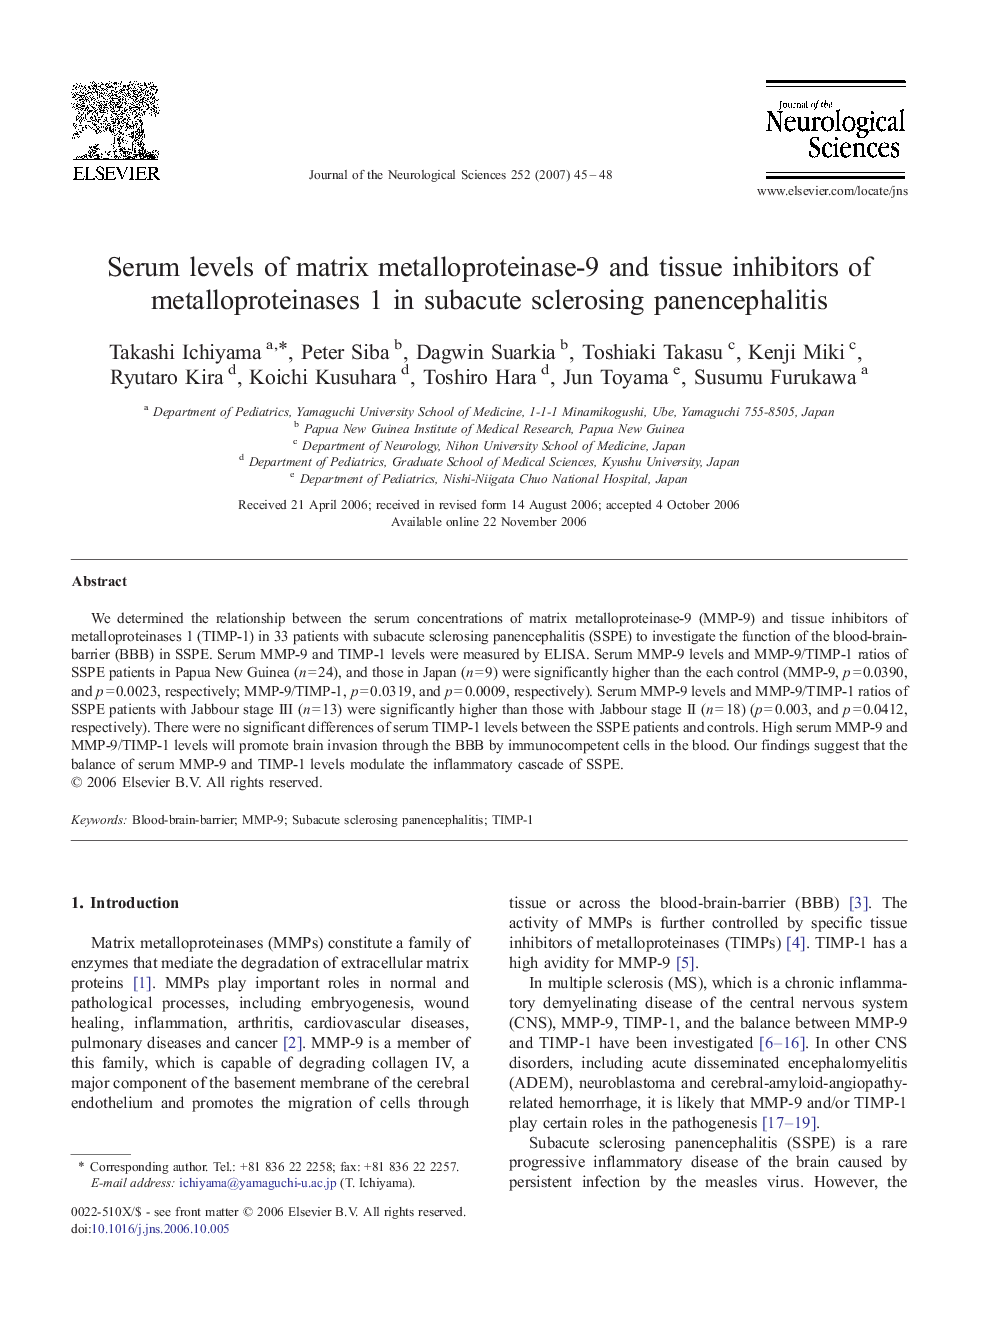 Serum levels of matrix metalloproteinase-9 and tissue inhibitors of metalloproteinases 1 in subacute sclerosing panencephalitis